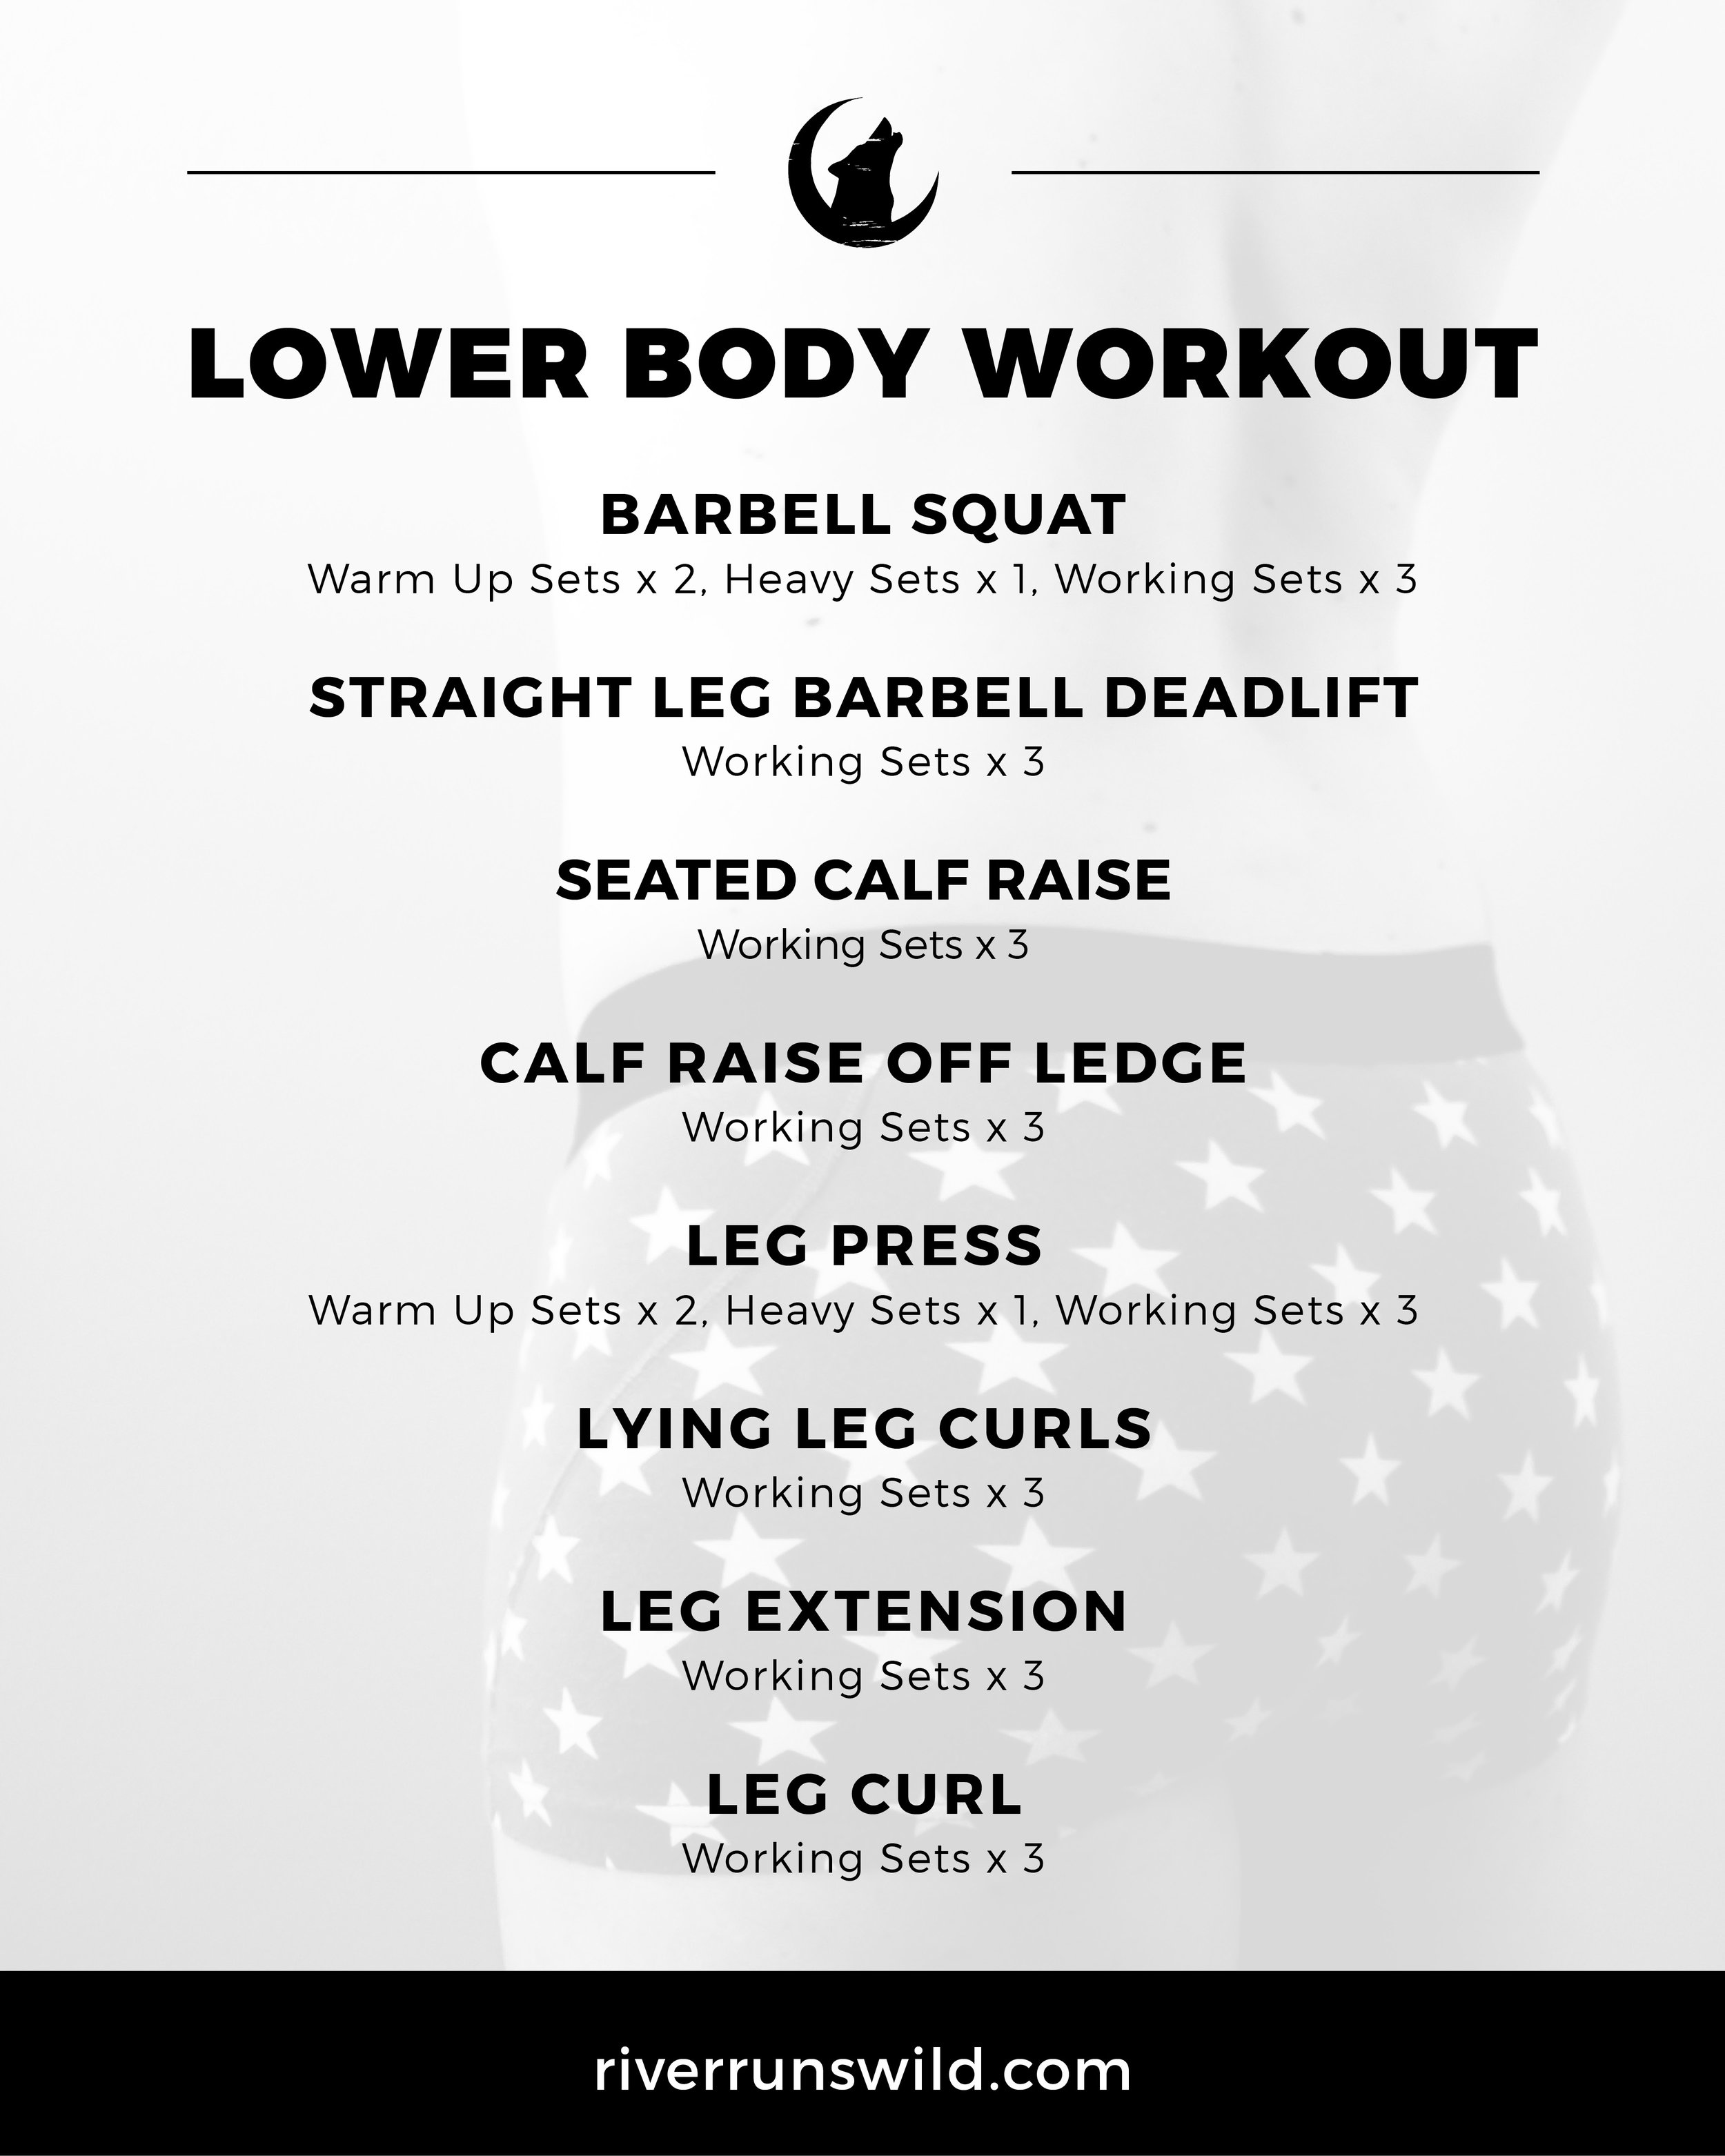 https://images.squarespace-cdn.com/content/v1/587956d1b8a79b66d3f17d09/1531927490581-US5KYT2JIUHNHMZKEO48/River-Runs-Wild-Blog-FTM-Fitness-Lower-Body-Workout-Training-Plan-Get-Big-Size-Mass-Strength-Butt-Legs-Glutes-Muscle